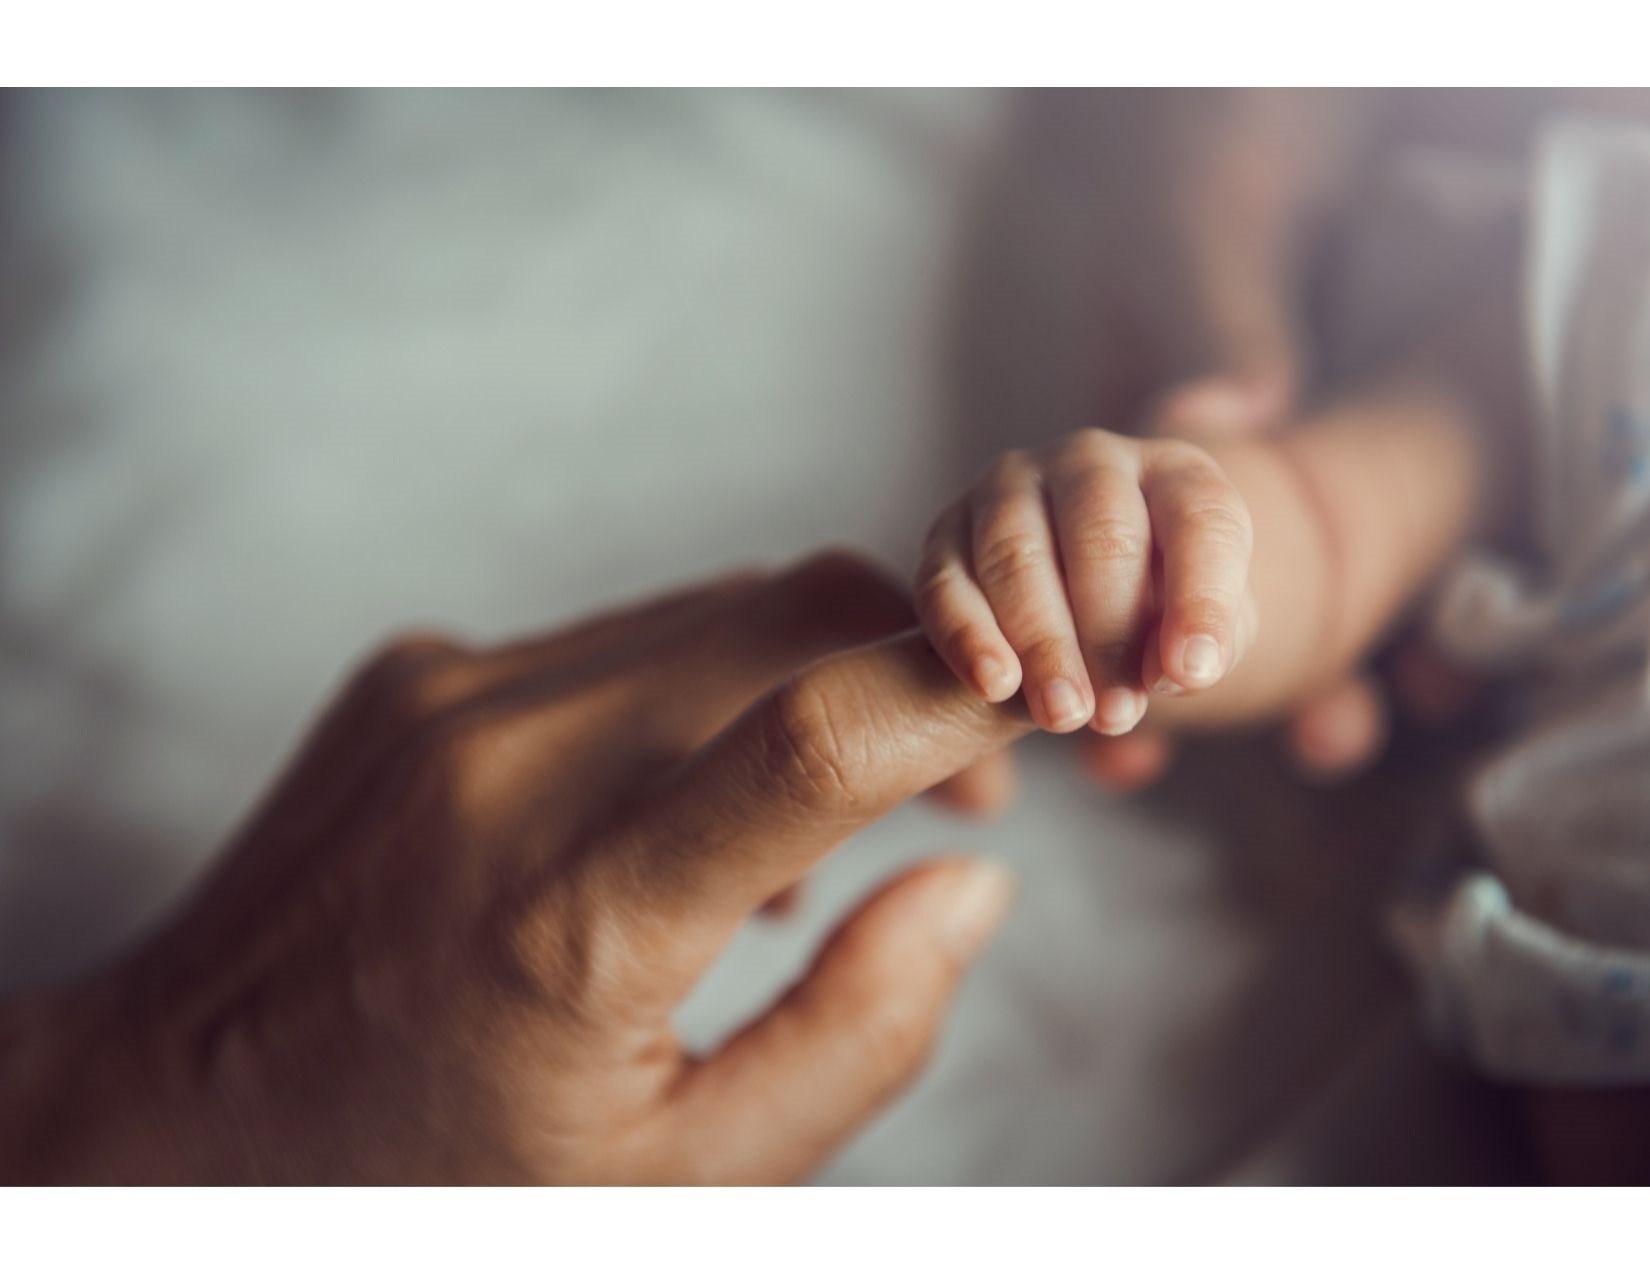 infant hand holding finger of adult hand